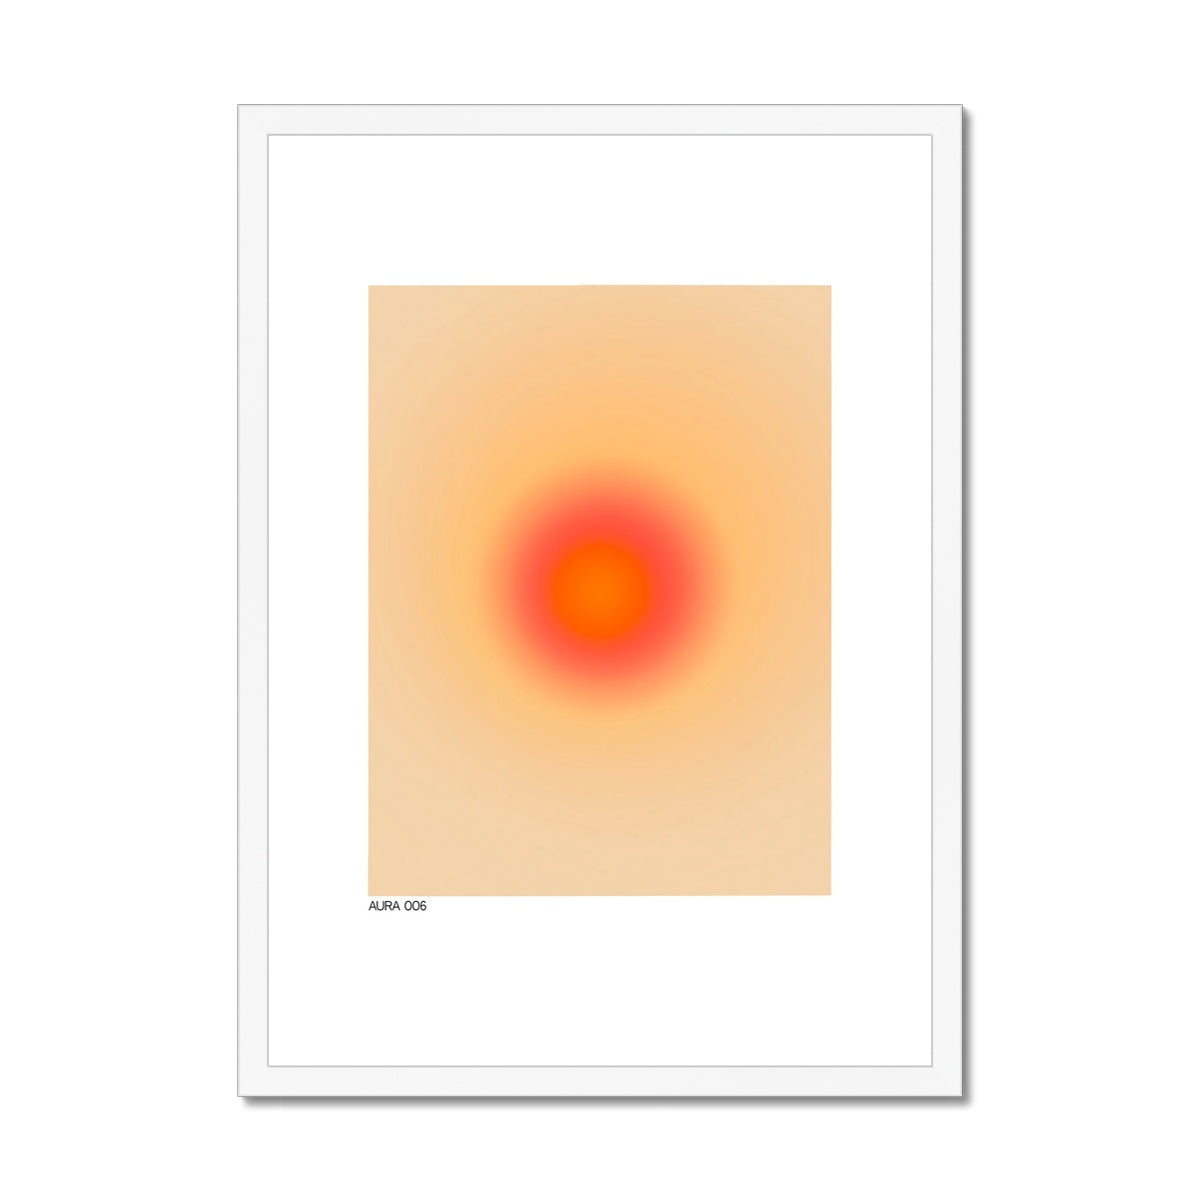 aura 006 Framed & Mounted Print